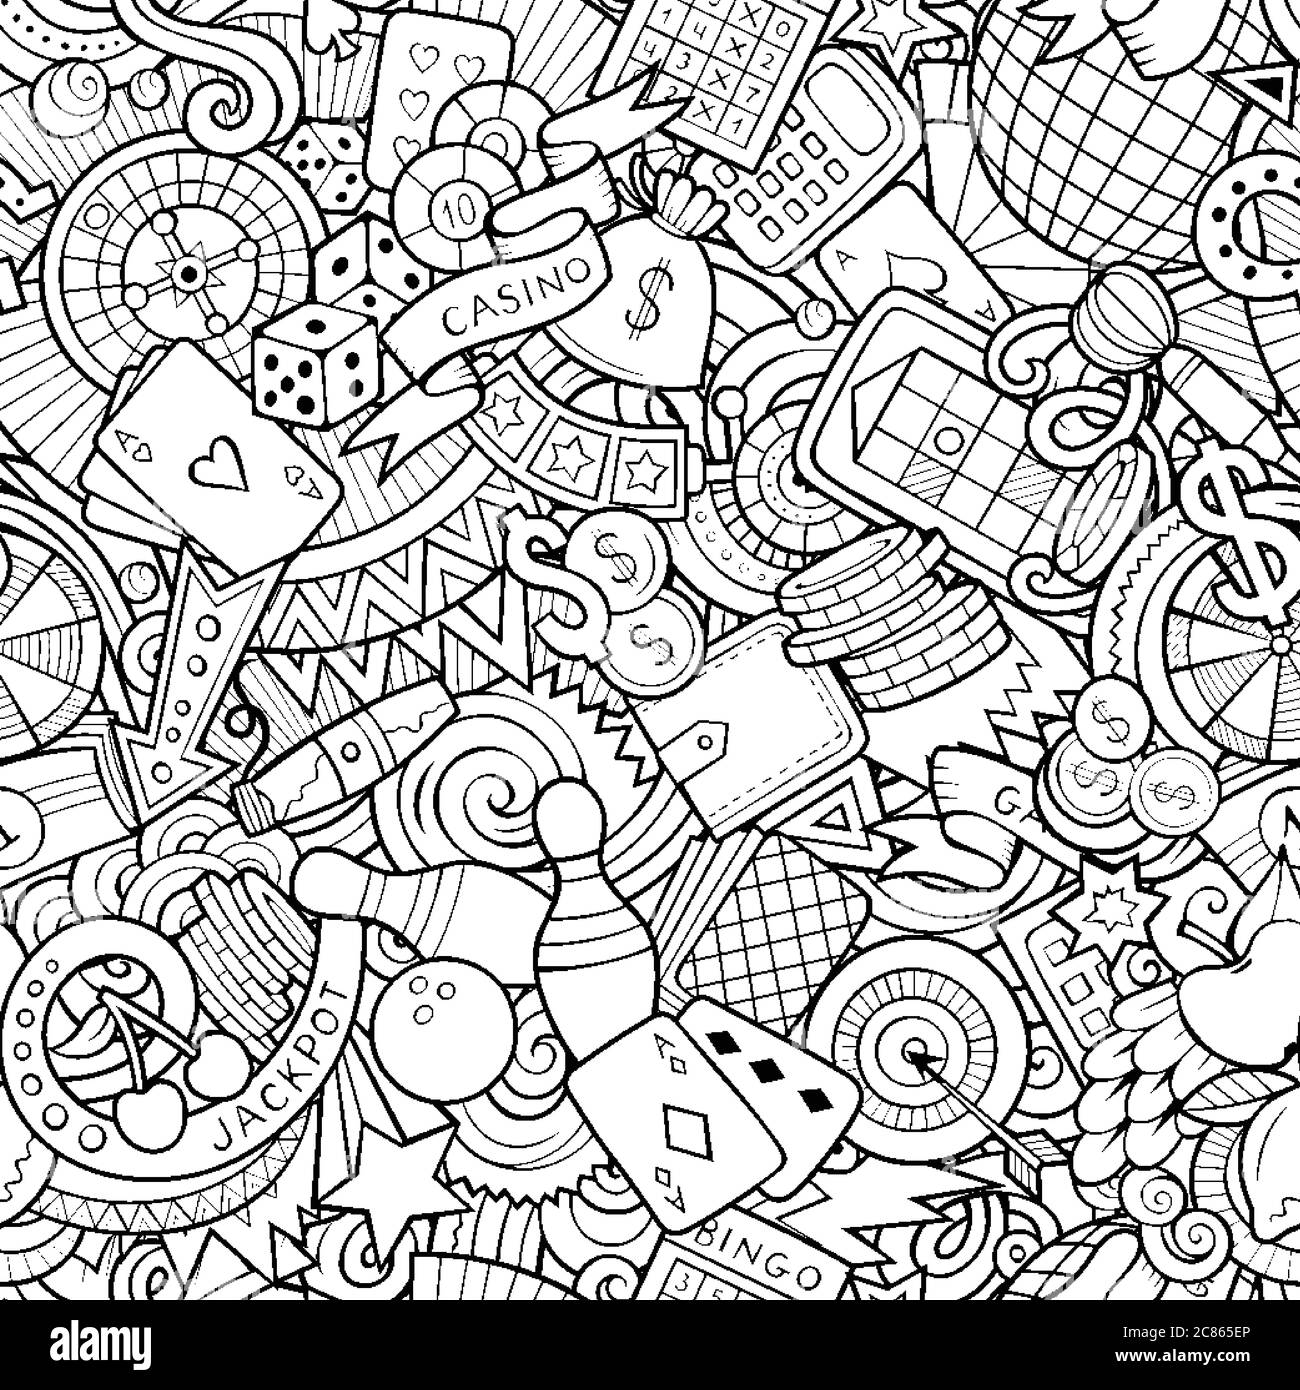 Cartoon cute doodles hand drawn Casino seamless pattern. Stock Vector